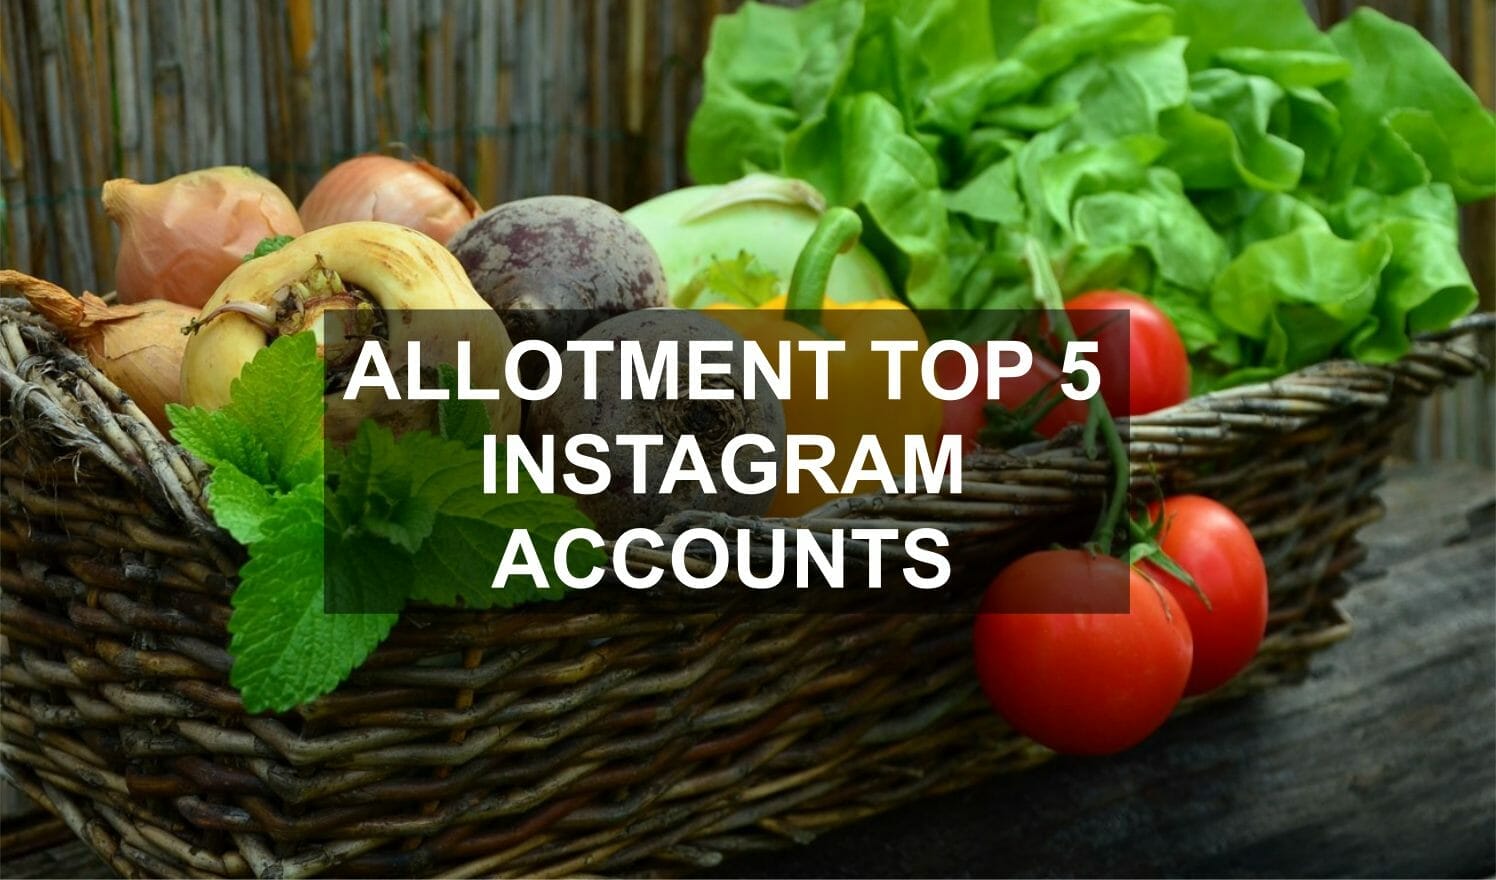 Allotment Top 5 Instagram